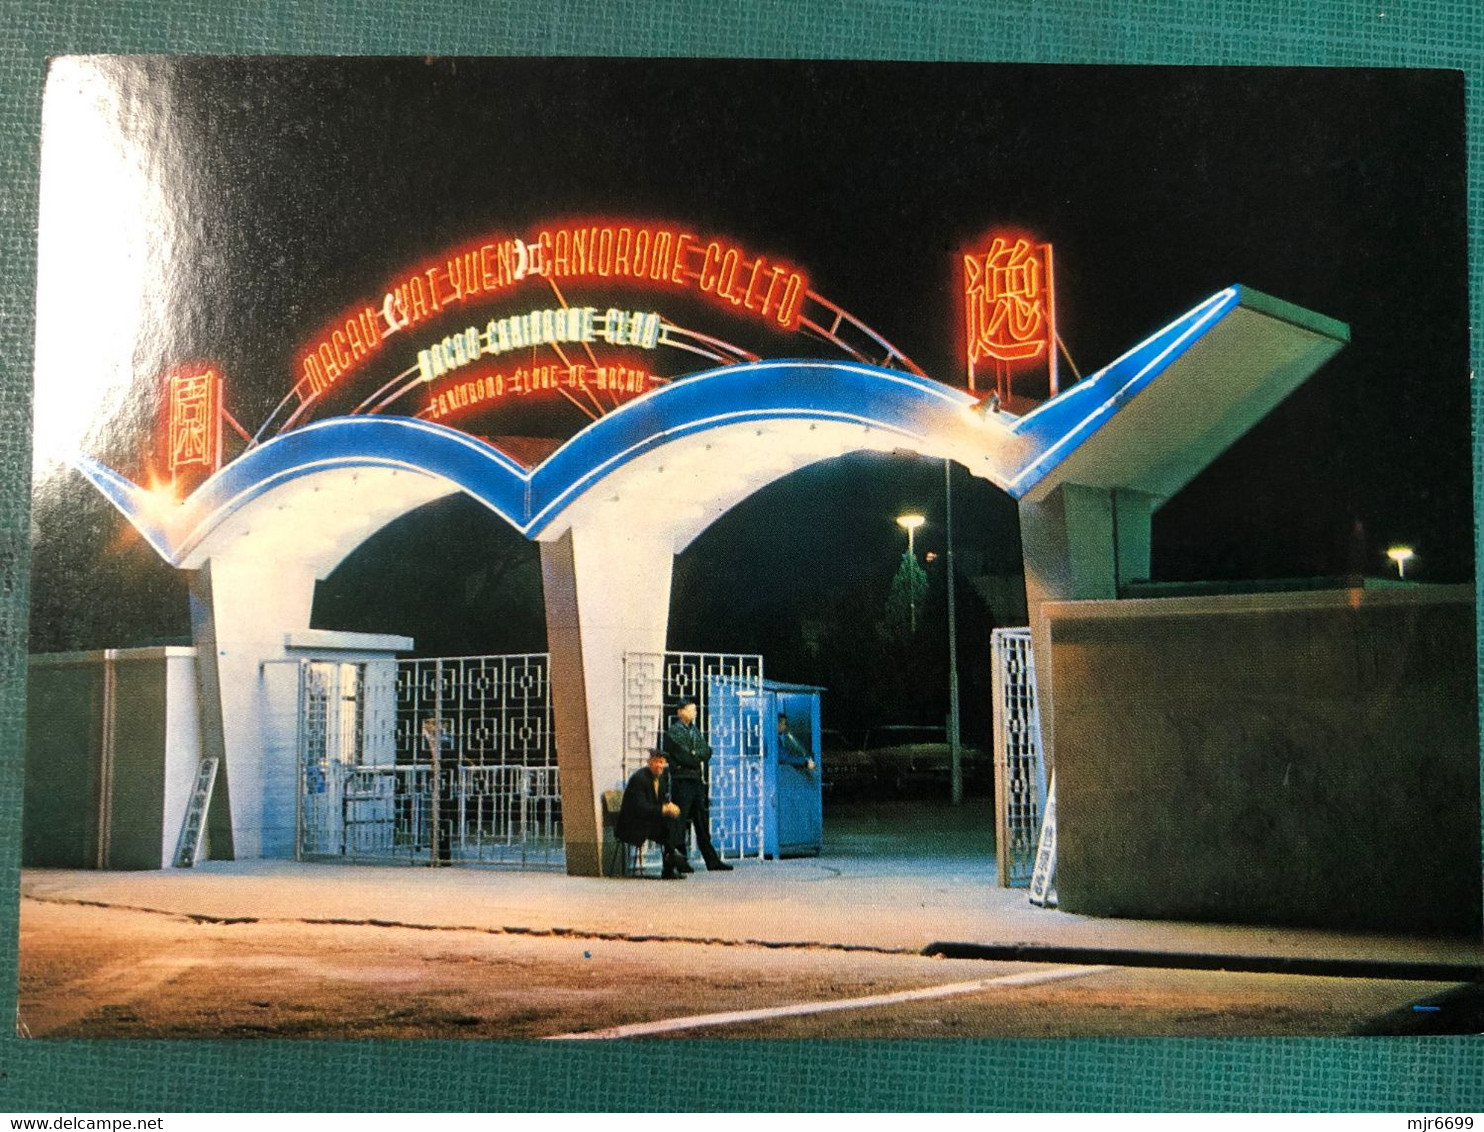 MACAU 1970'S, DOG RACING CANIDROME AT NIGHT, BOOK STORE PRINTING, SIZE 14,8 X 10CM, #206 - Macao